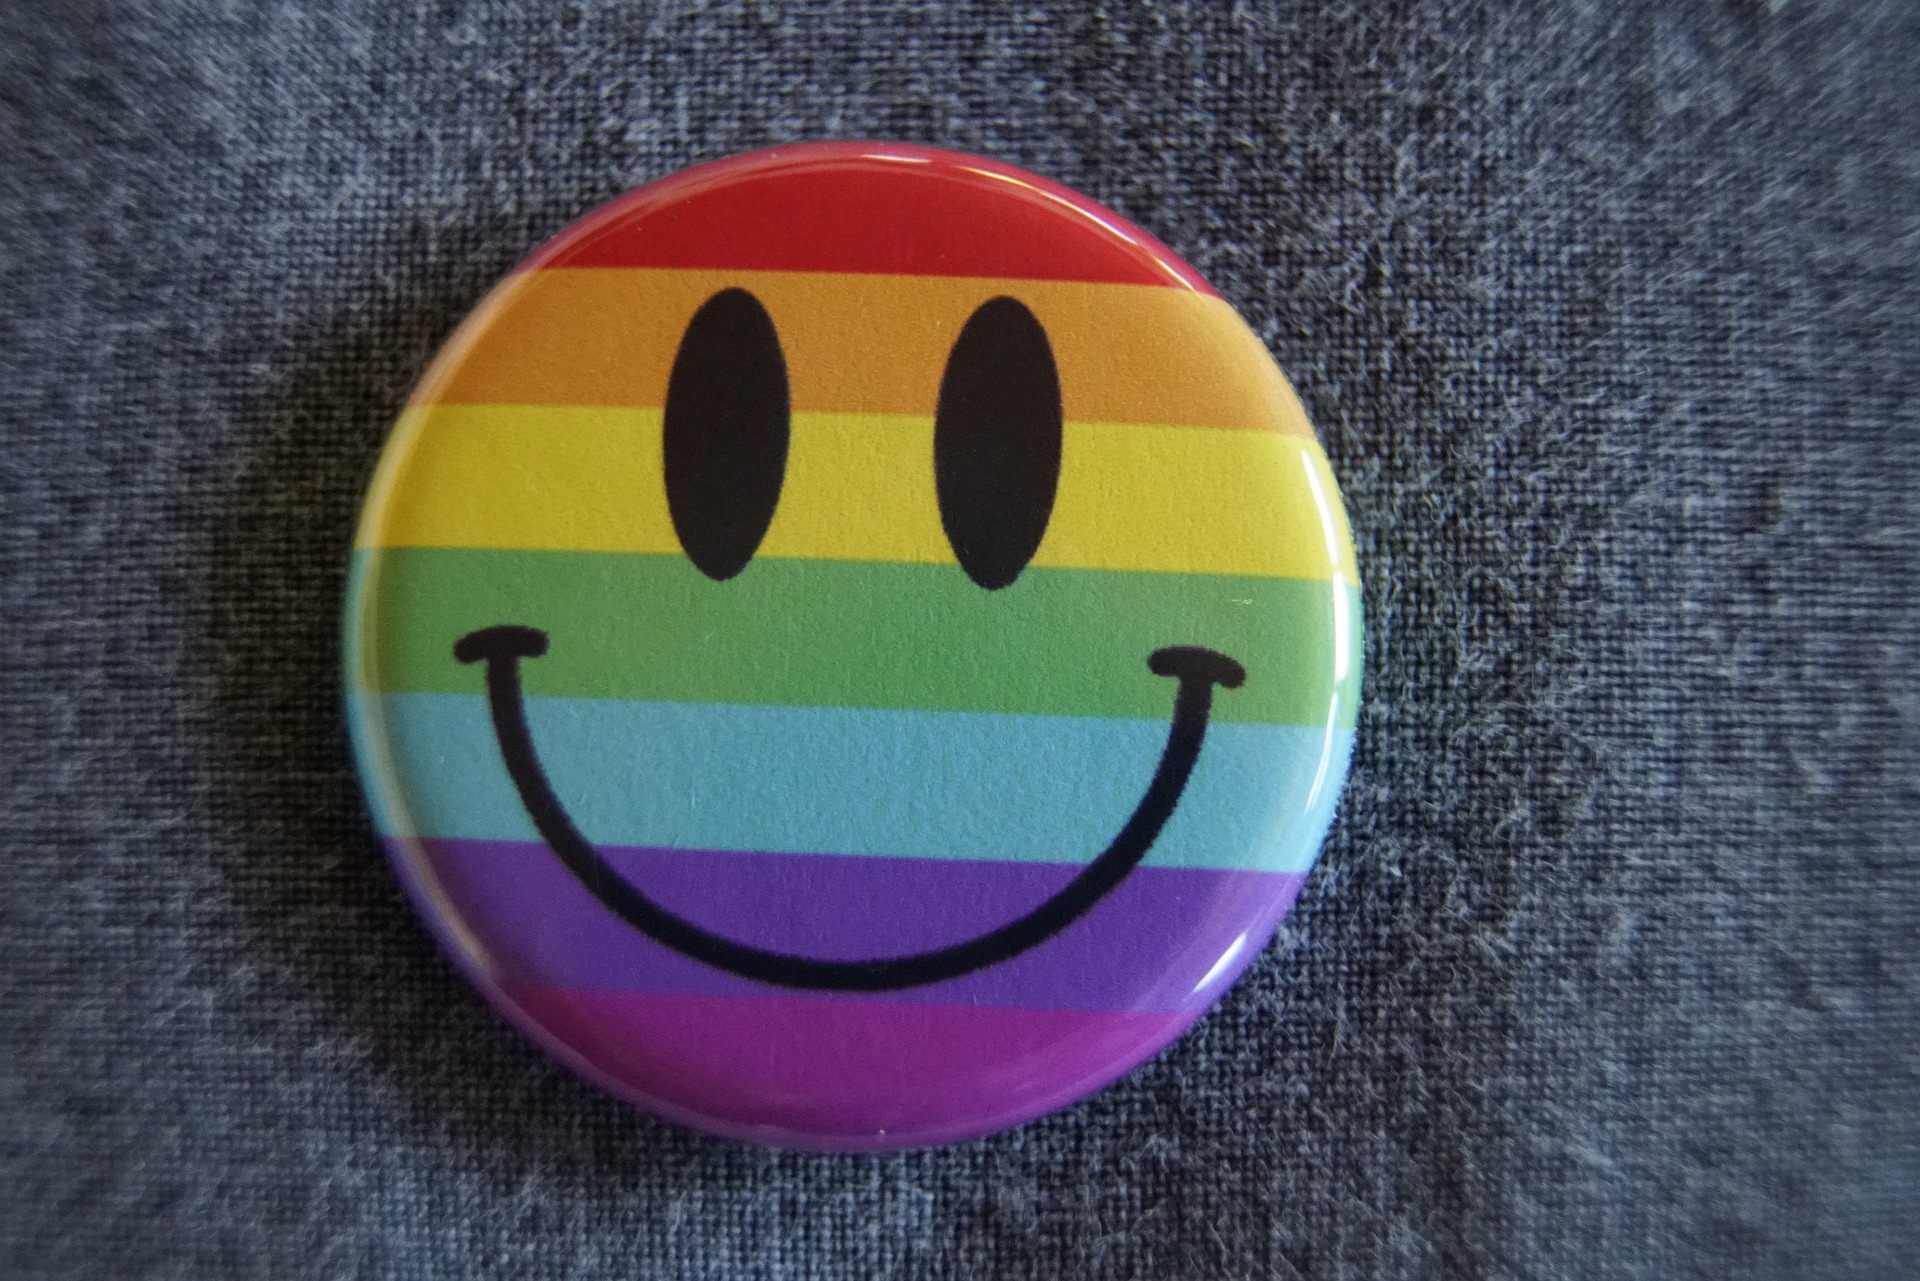 smiley face on a rainbow button